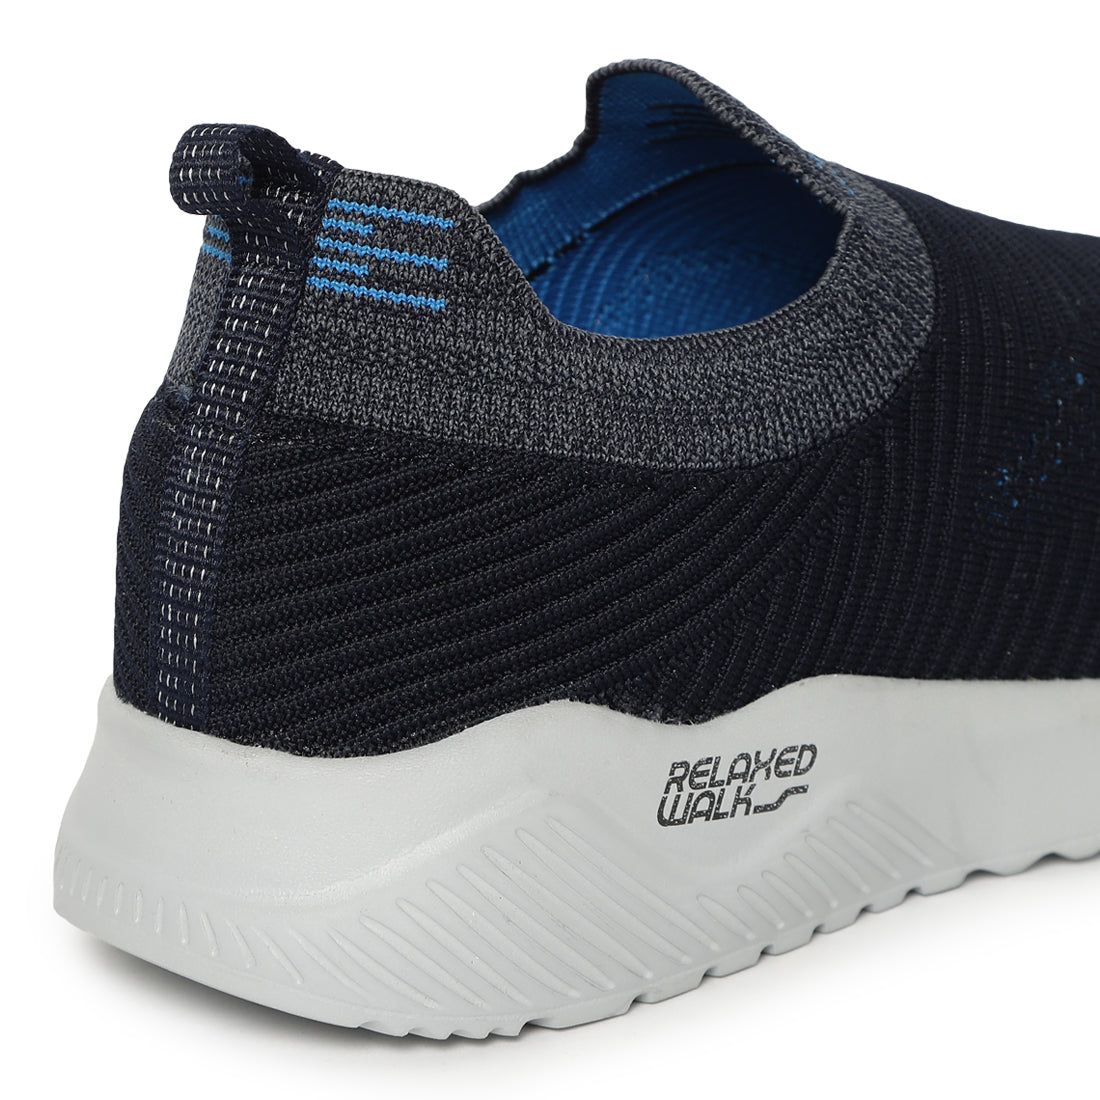 Eeken Navy Blue - Sky Blue Athleisure Shoes for Men